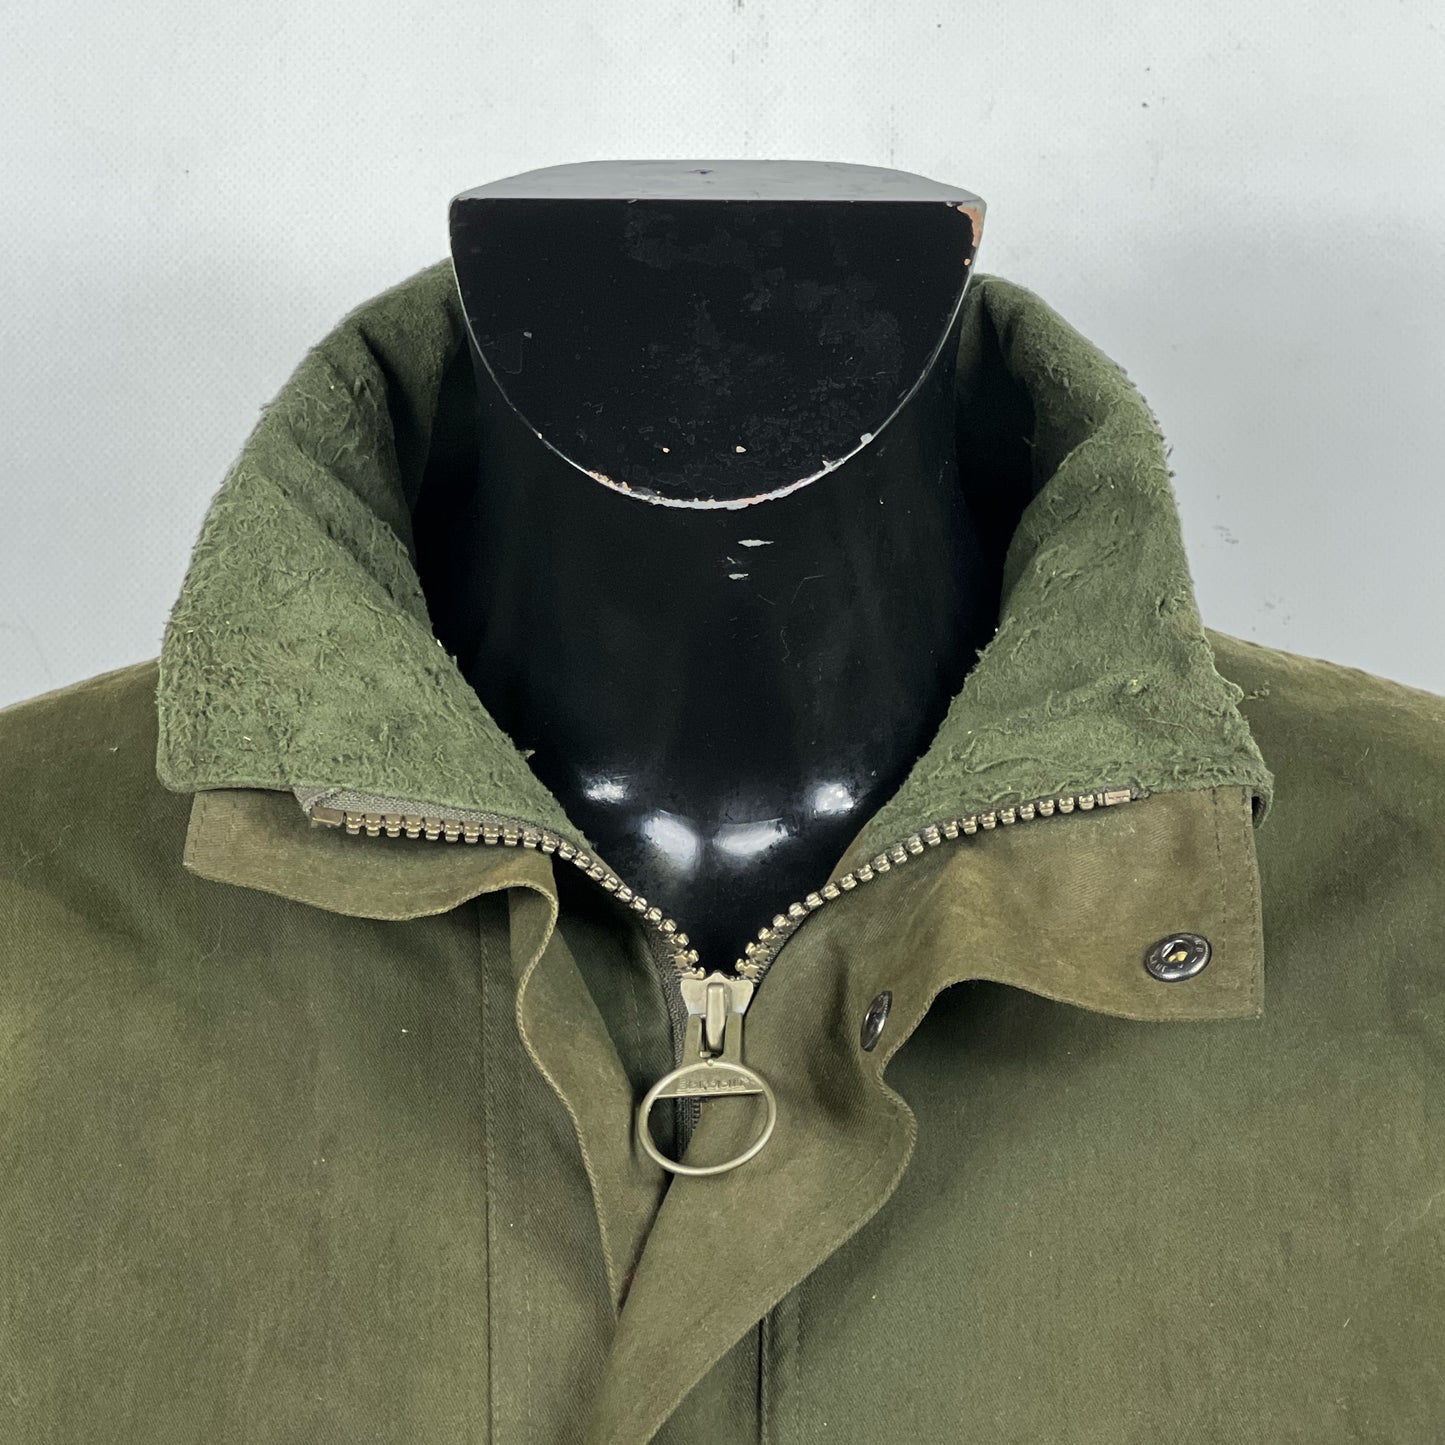 Barbour Giacca Uomo Impermeabile verde Large Trapper Endurance Jacket size L